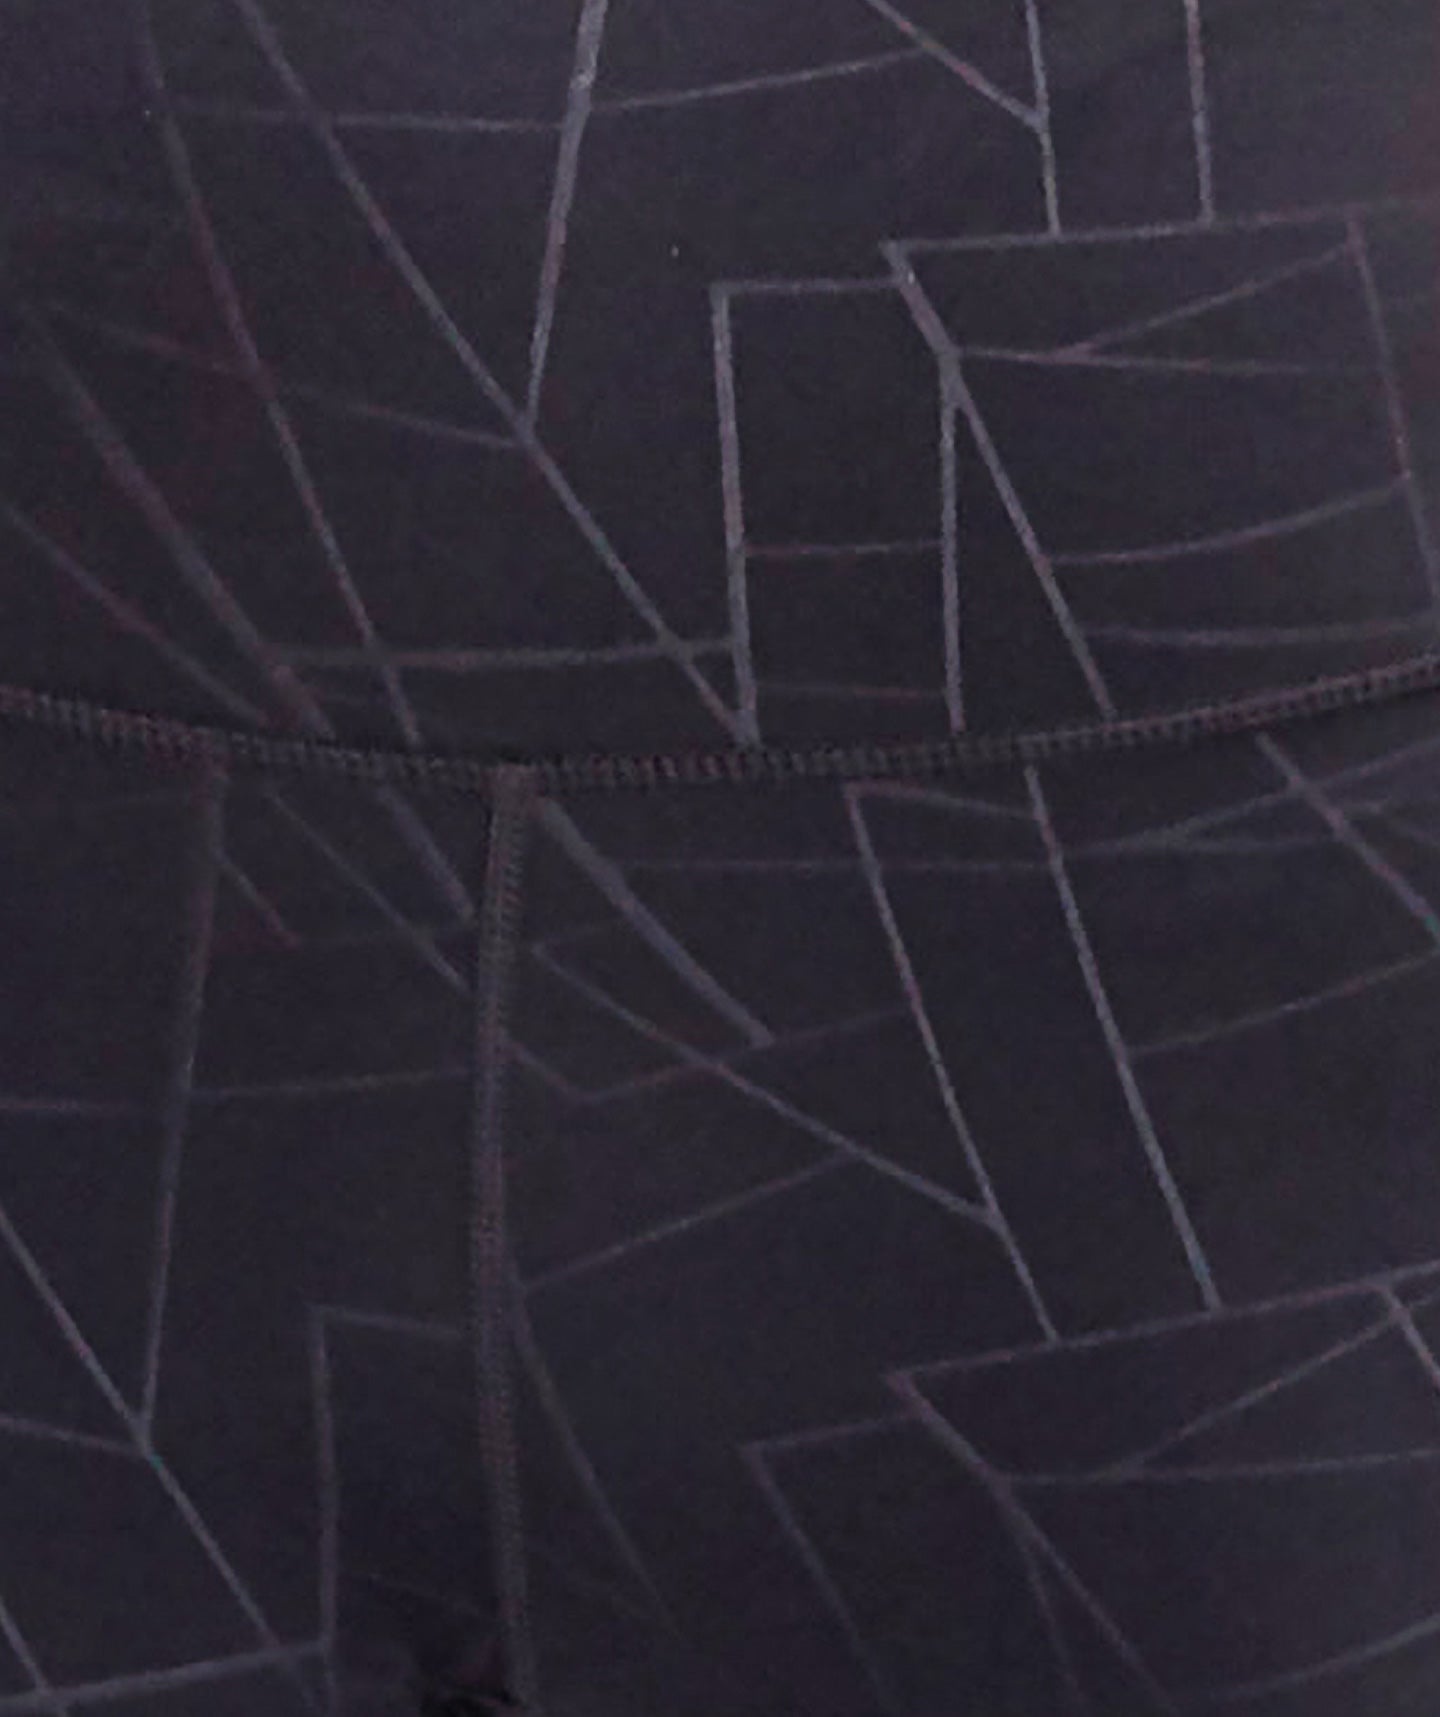 Energy Leggings with Geometric Silver Lines Print in Black